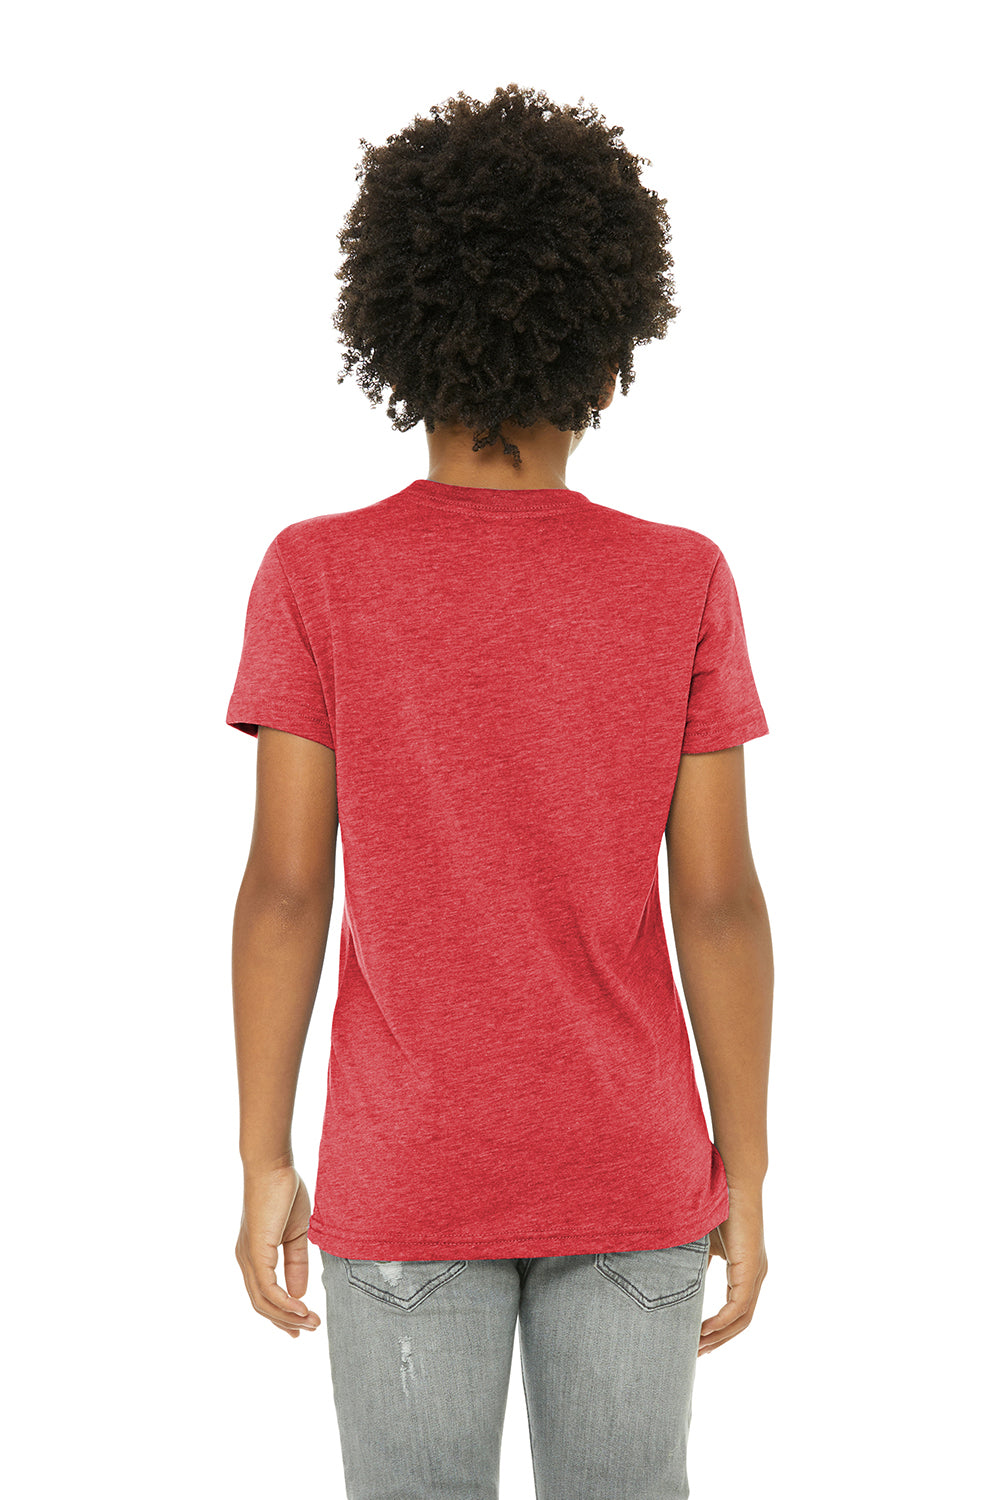 Bella + Canvas 3413Y Youth Short Sleeve Crewneck T-Shirt Red Model Back